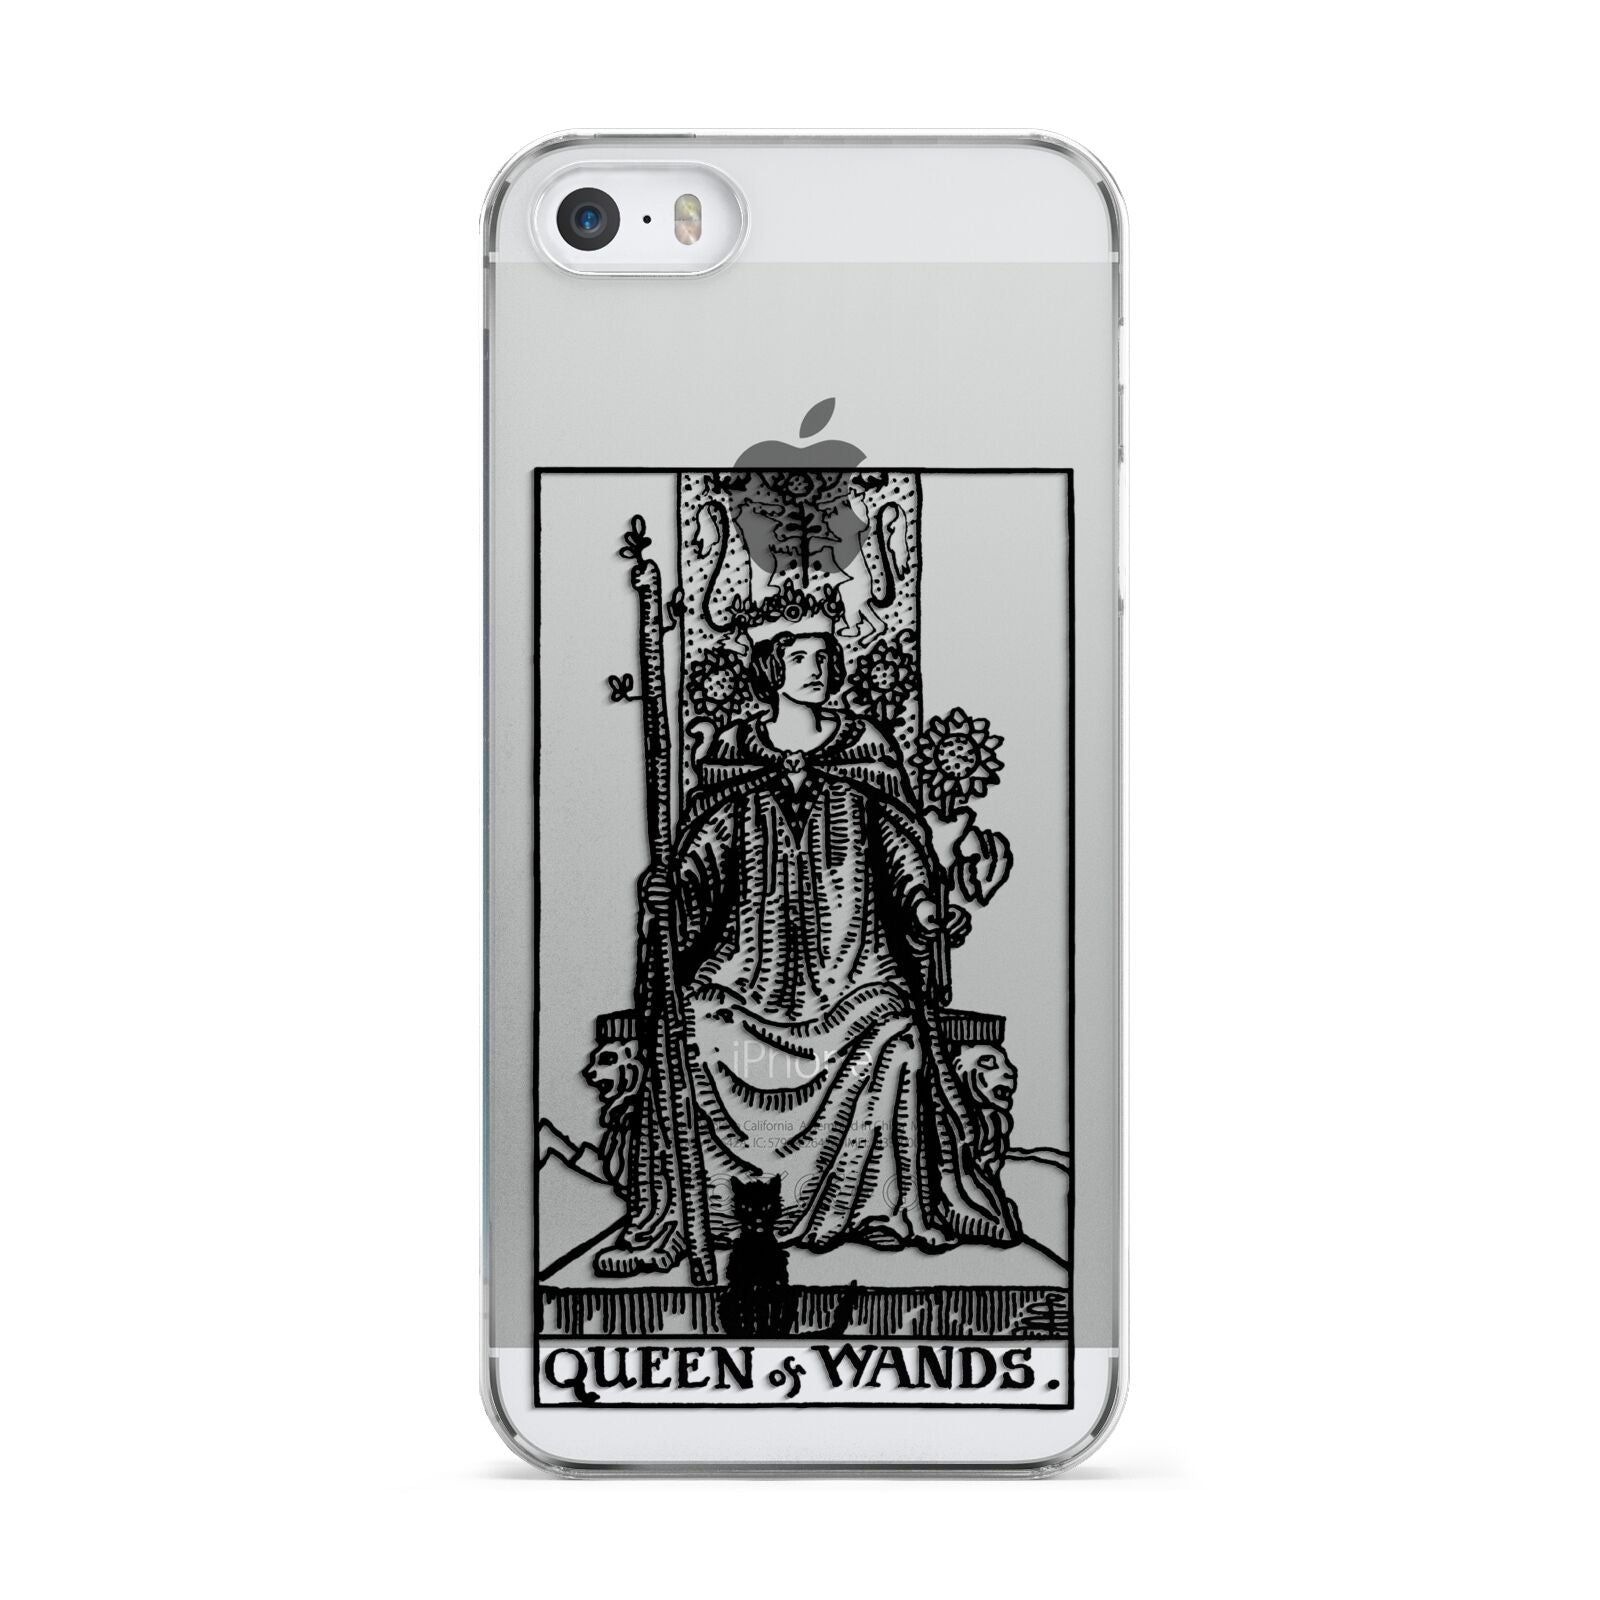 Queen of Wands Monochrome Apple iPhone 5 Case